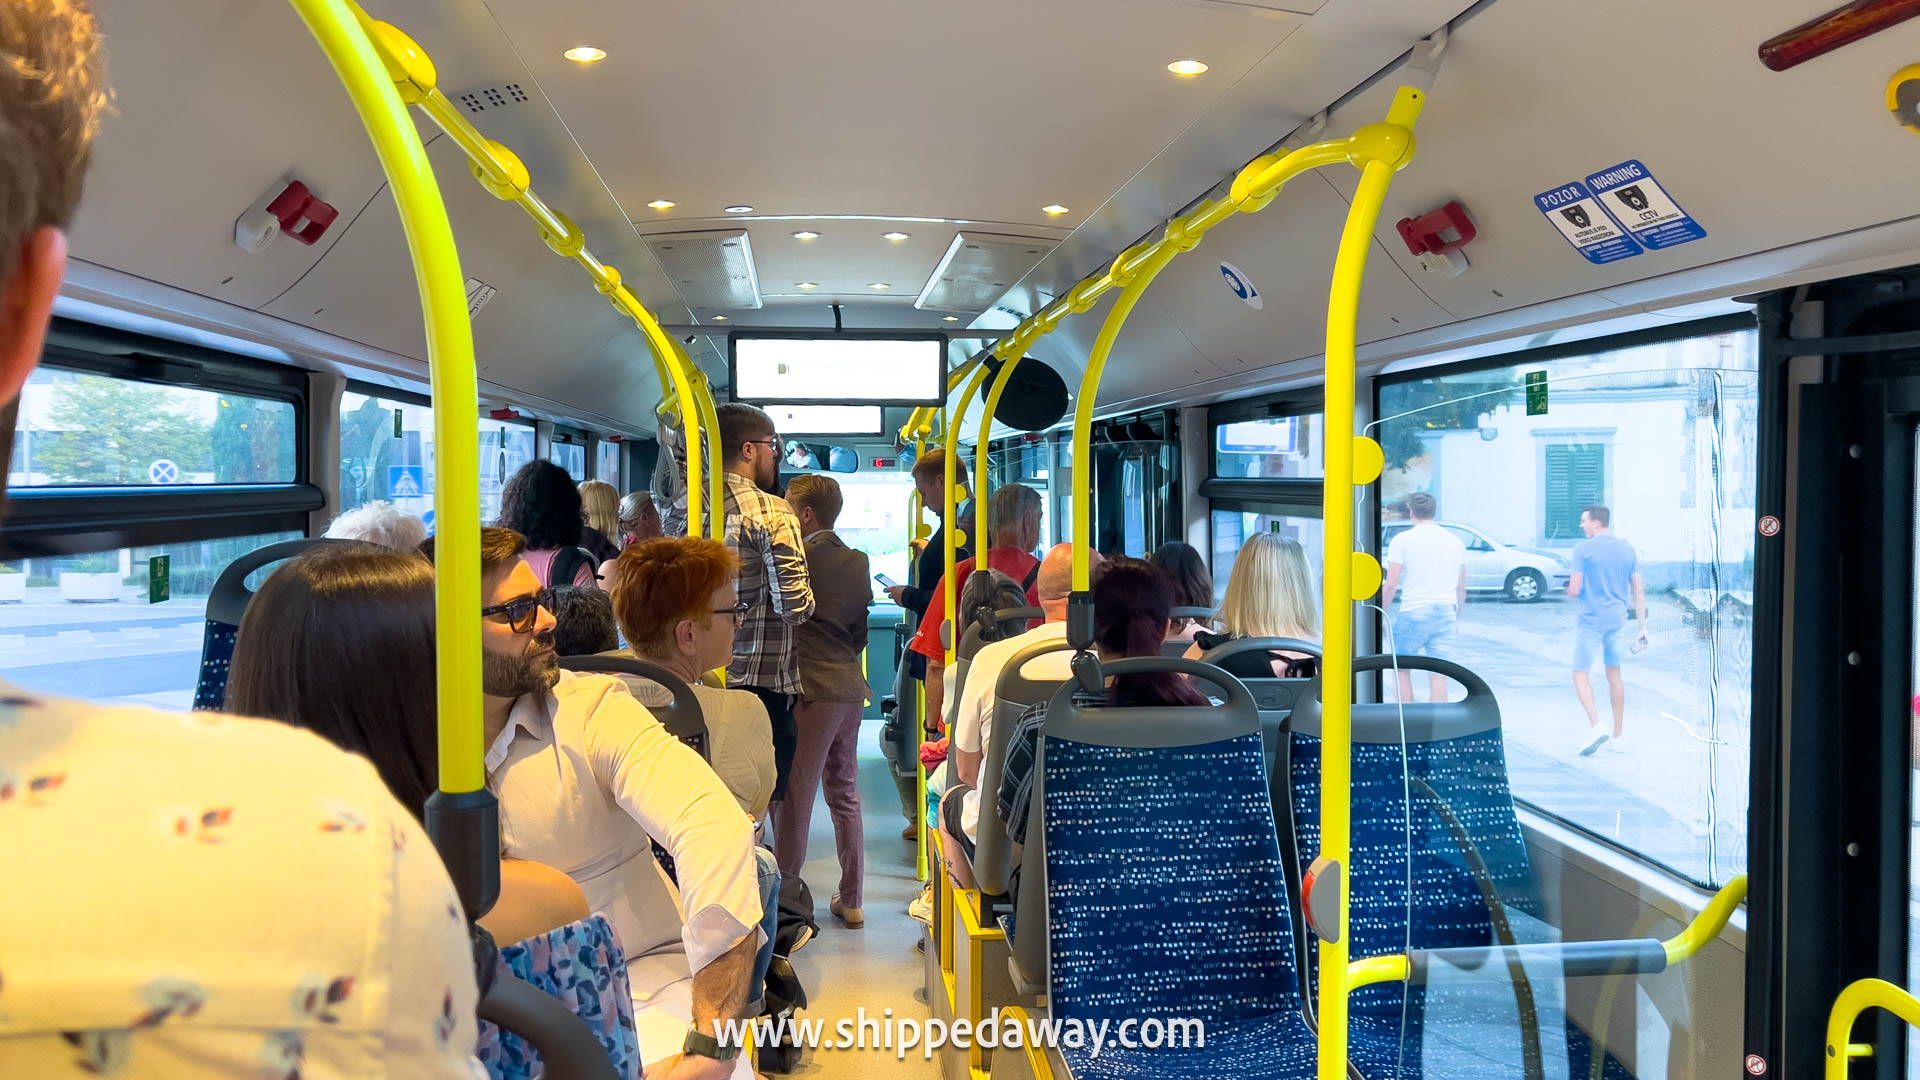 dubrovnik bus, getting around in dubrovnik, dubrovnik travel tips, dubrovnik croatia